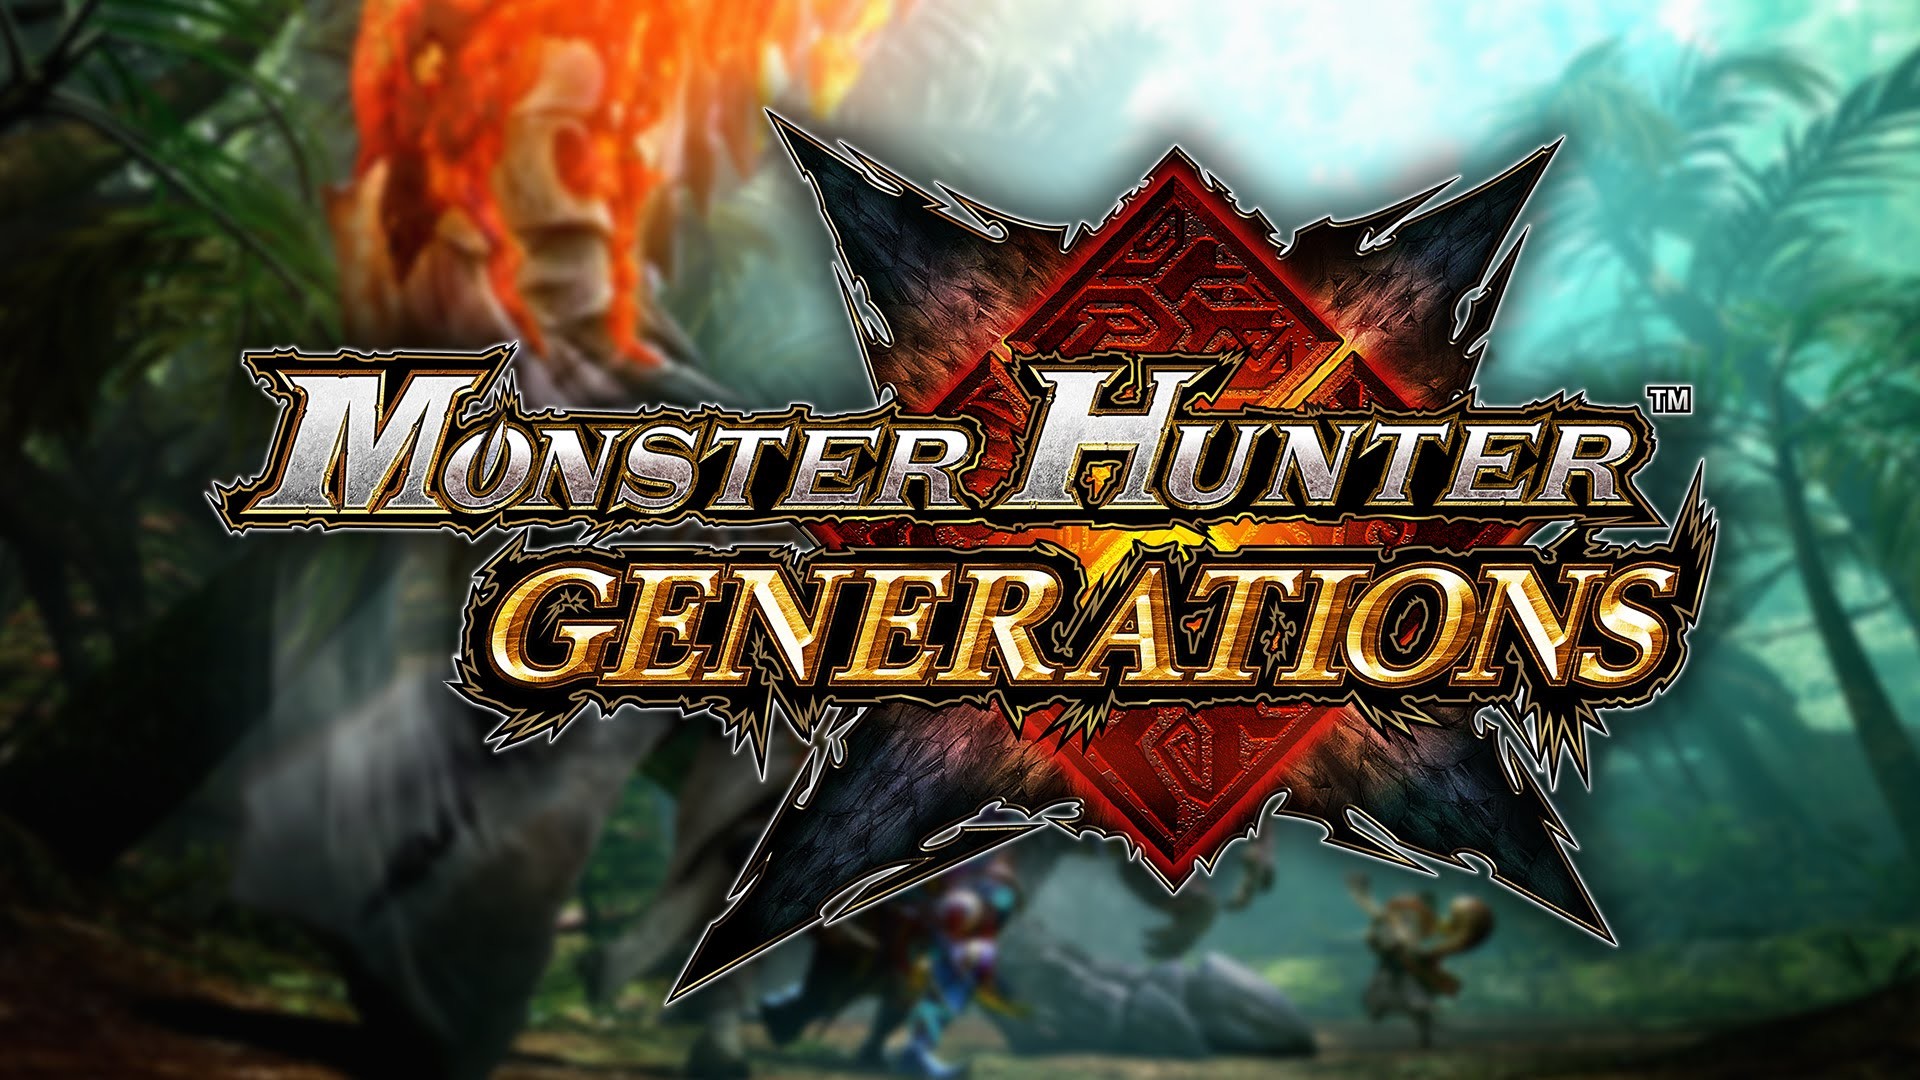 1920x1080 Monster Hunter Generations im Westen! - Erste Infos 03.03.2016 - YouTube